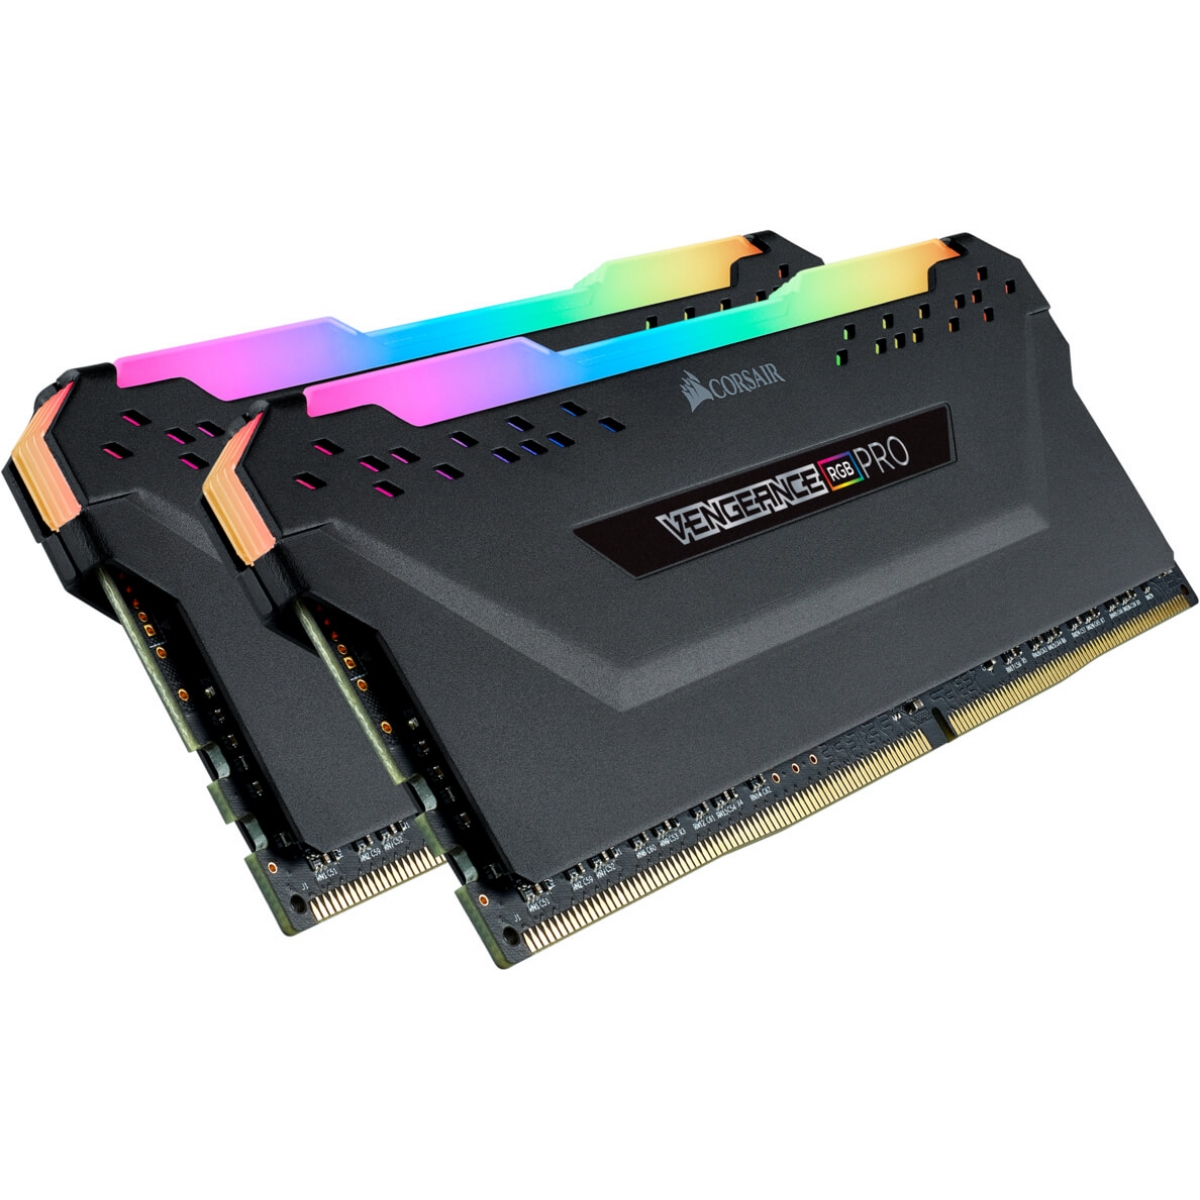 Memória DDR4 Corsair Vengeance RGB Pro 16GB (2x8GB) 3000MHz CMW16GX4M2C3000C15 